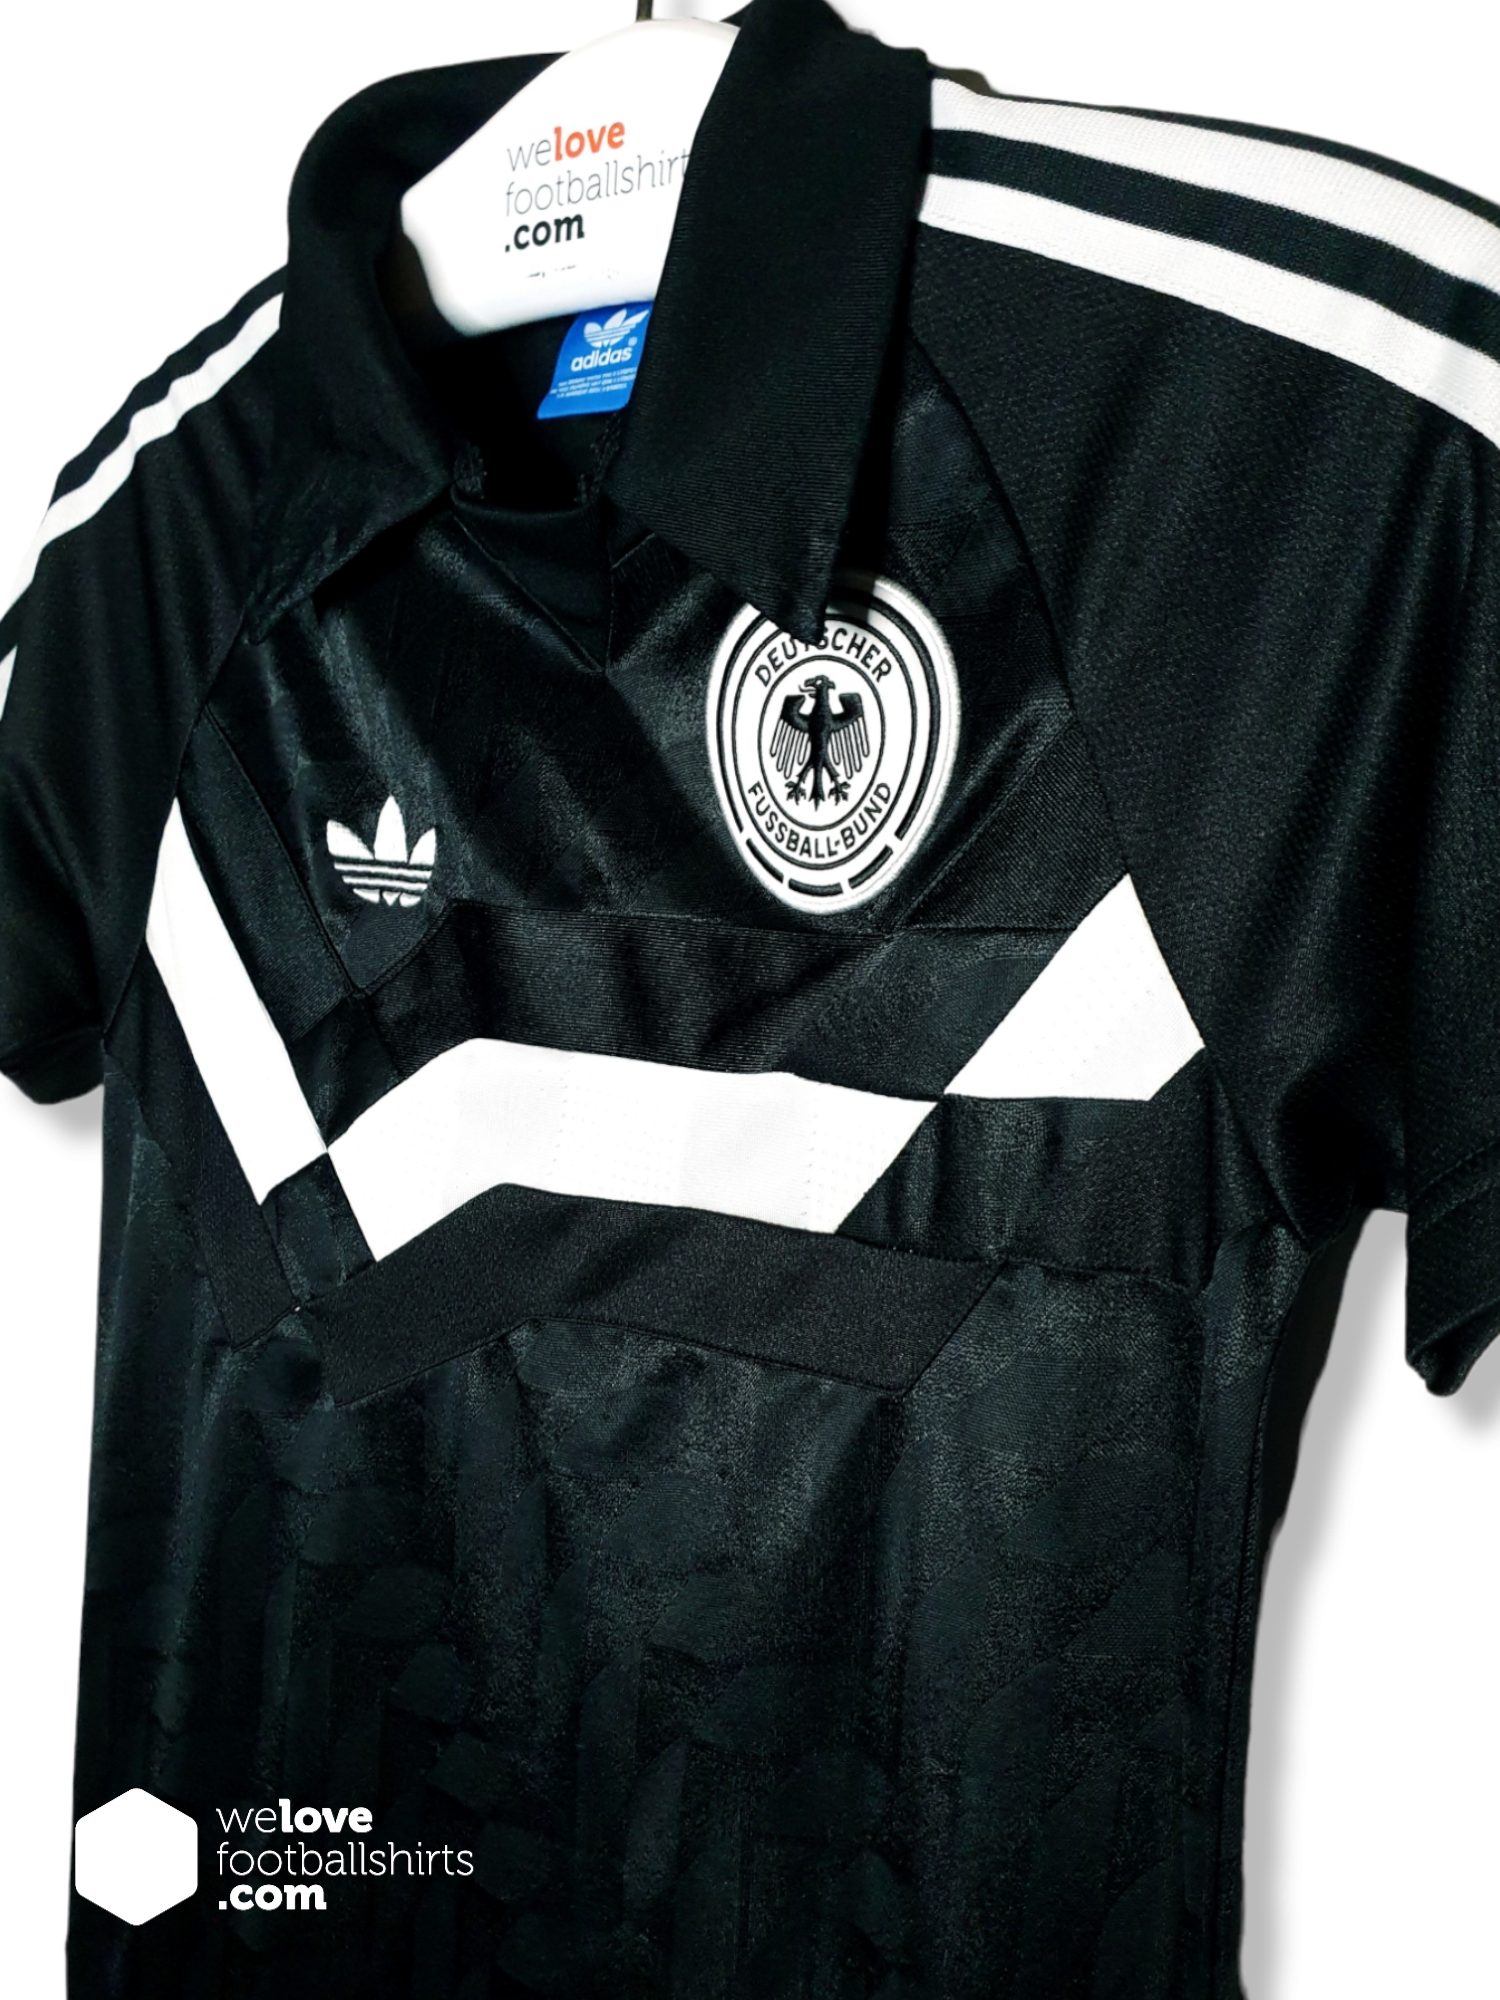 Adidas Originals vintage football shirt Germany - Welovefootballshirts.com